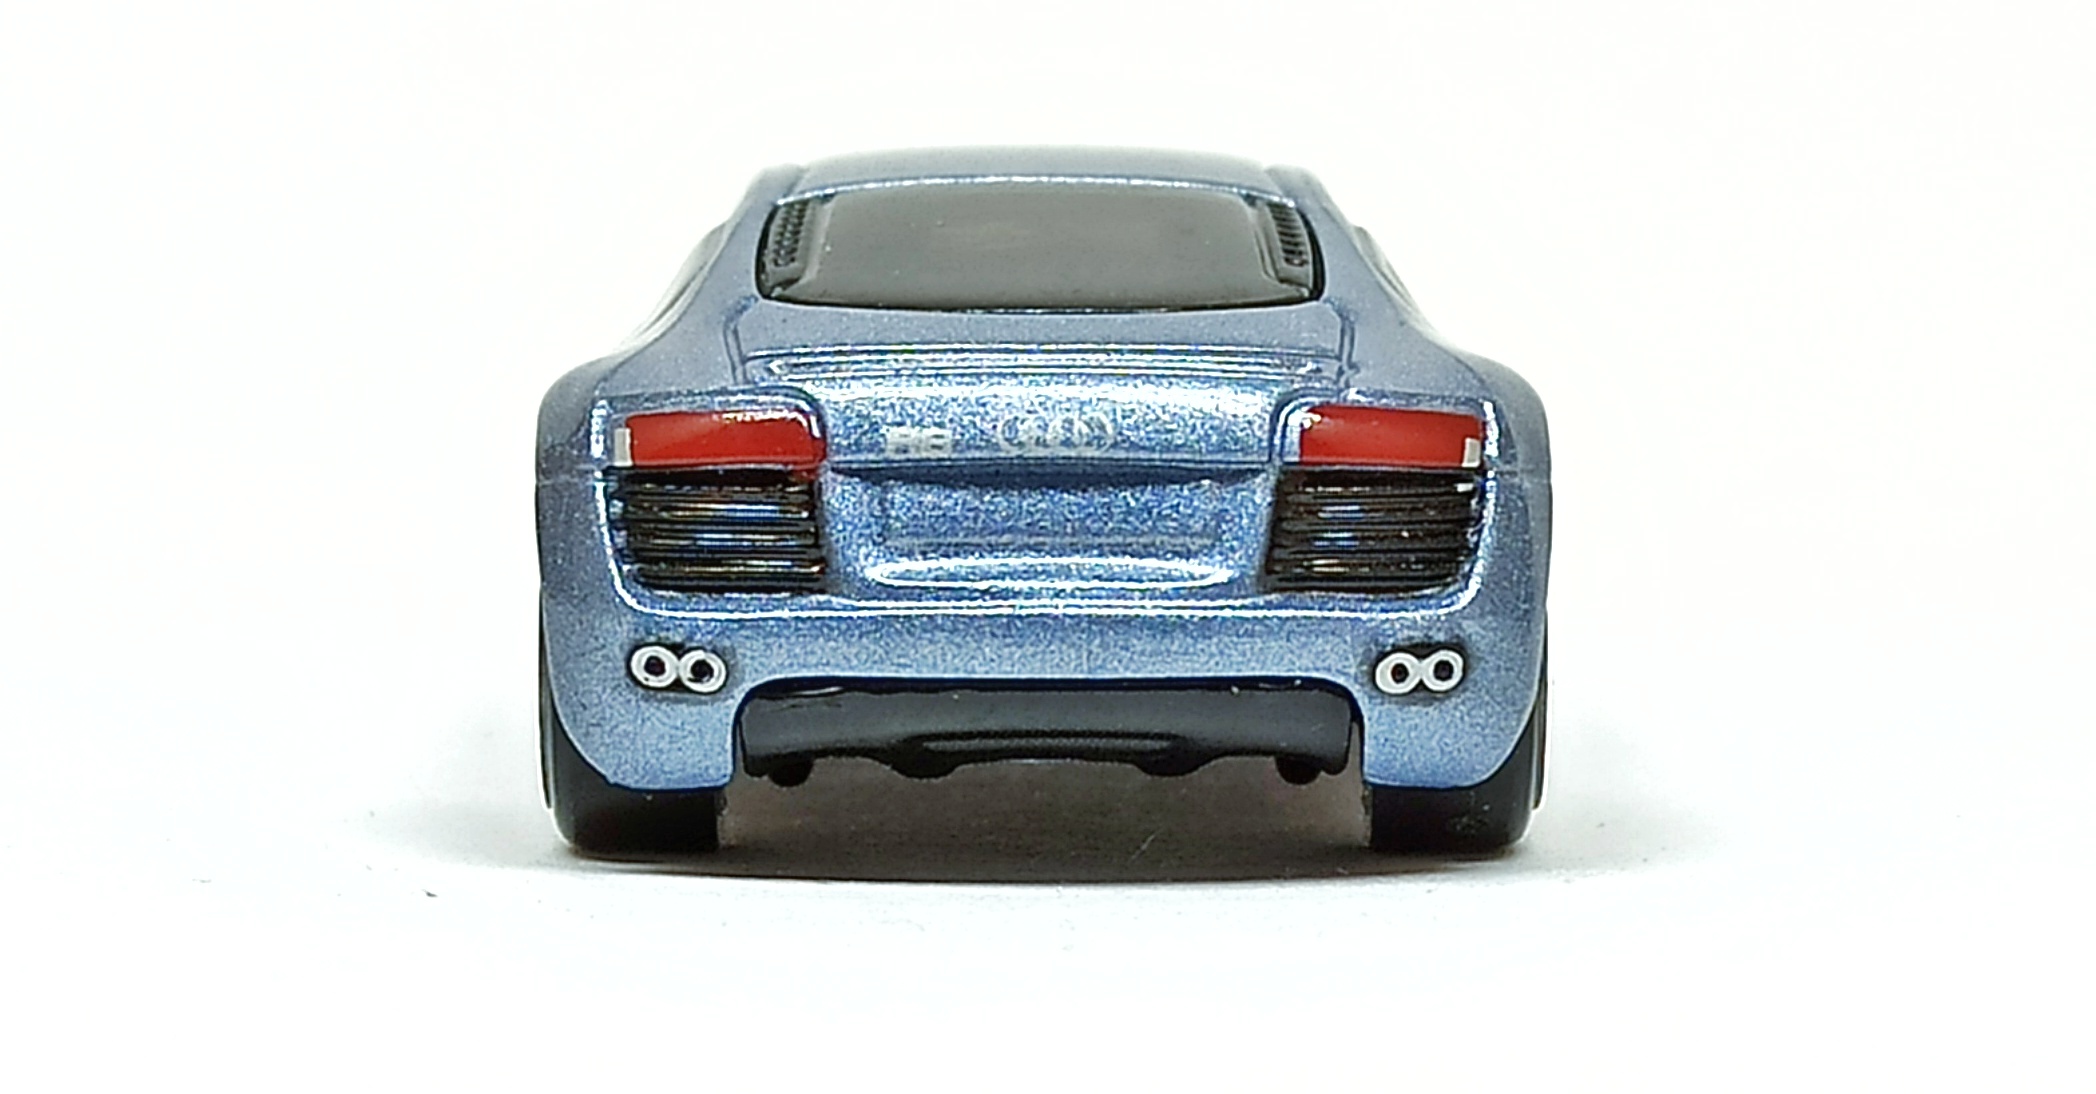 Hot Wheels Audi R8 (T4412) 2010 Speed Machines metallic steel blue